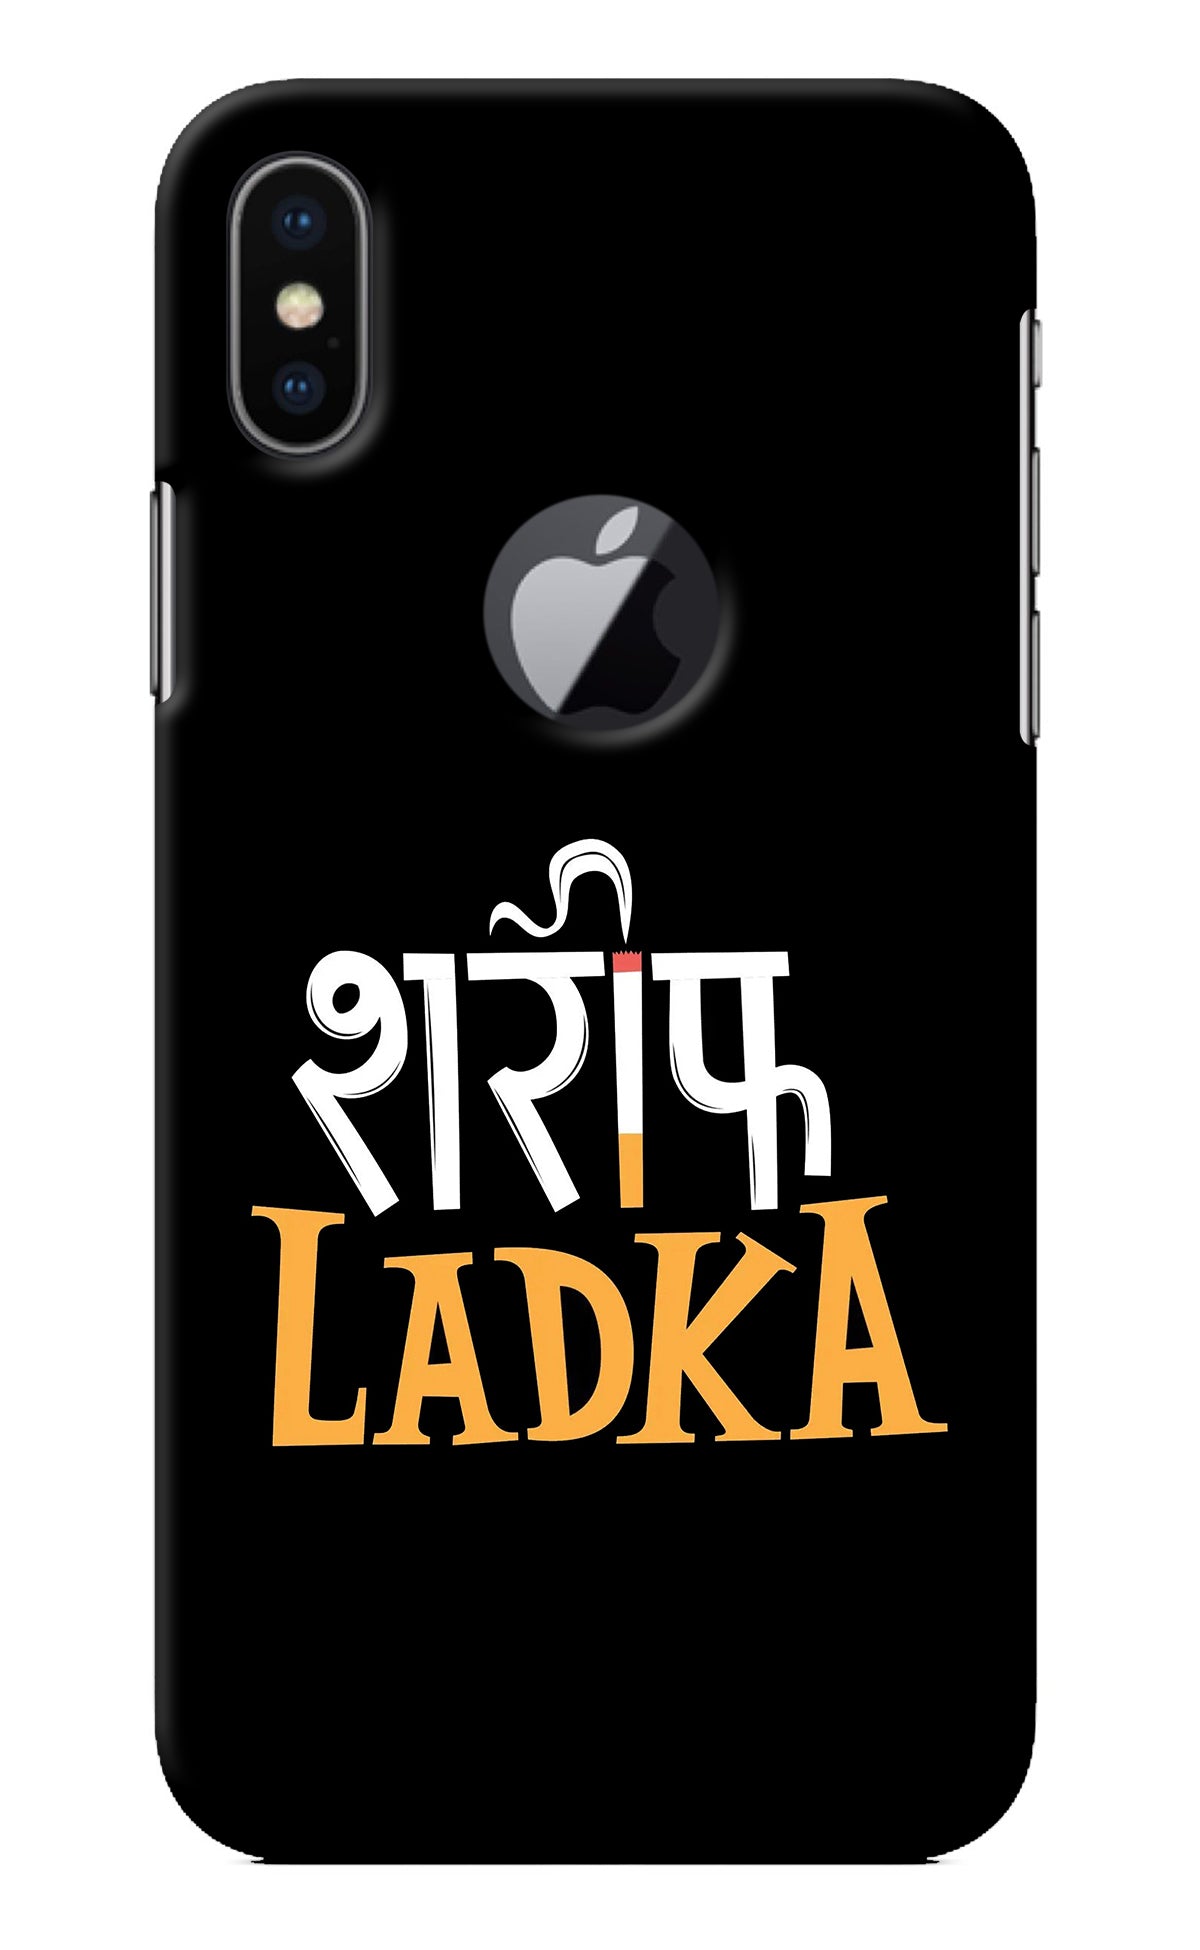 Shareef Ladka iPhone X Logocut Back Cover